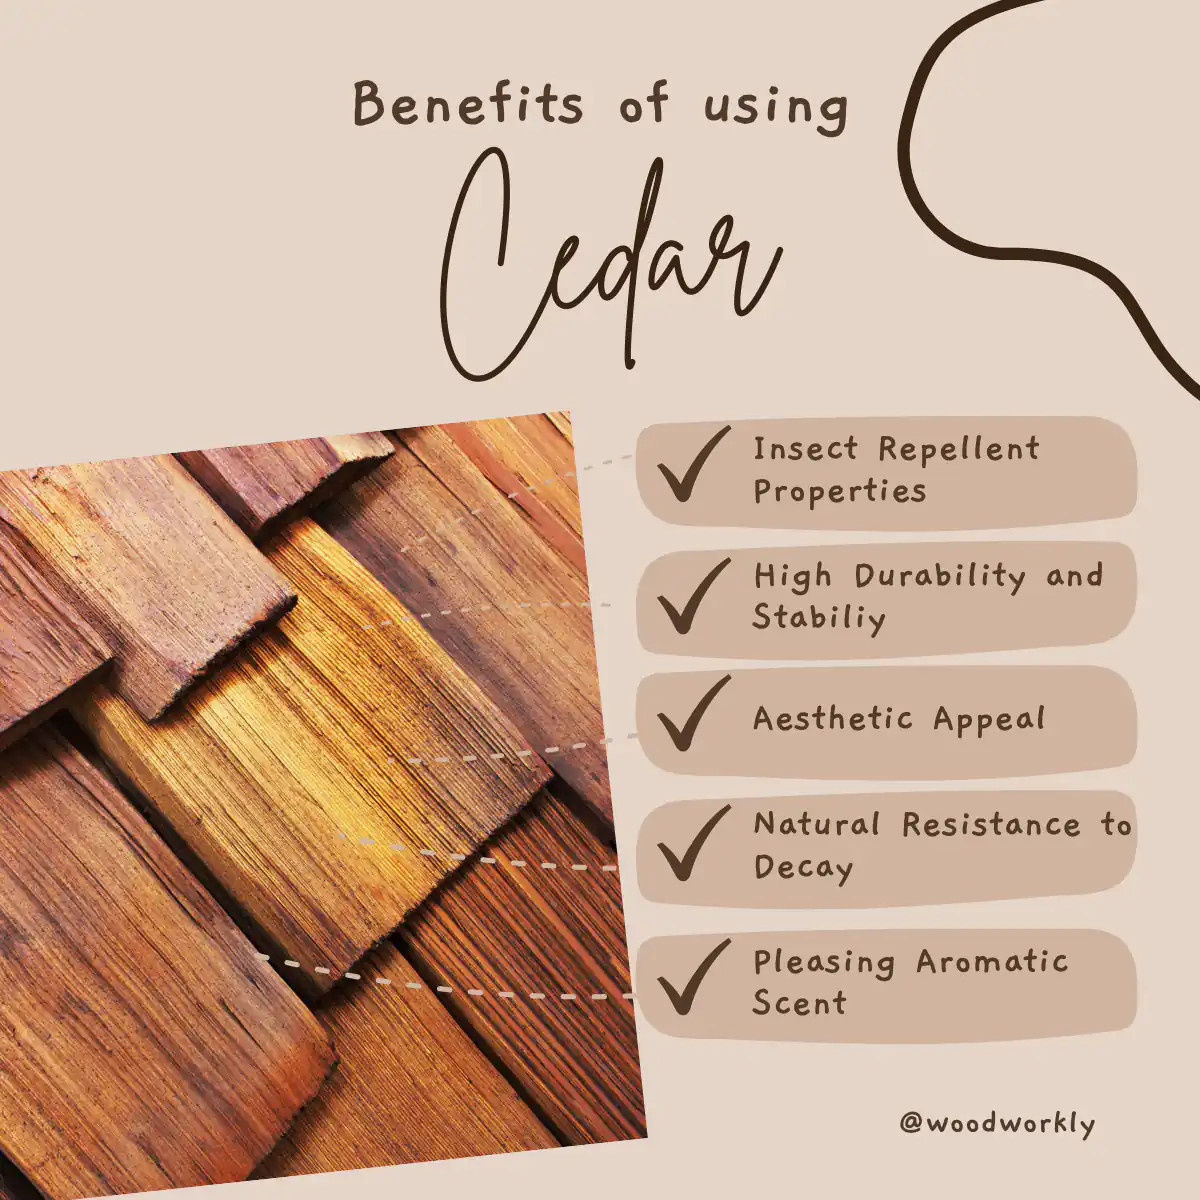 Benefits of using cedar